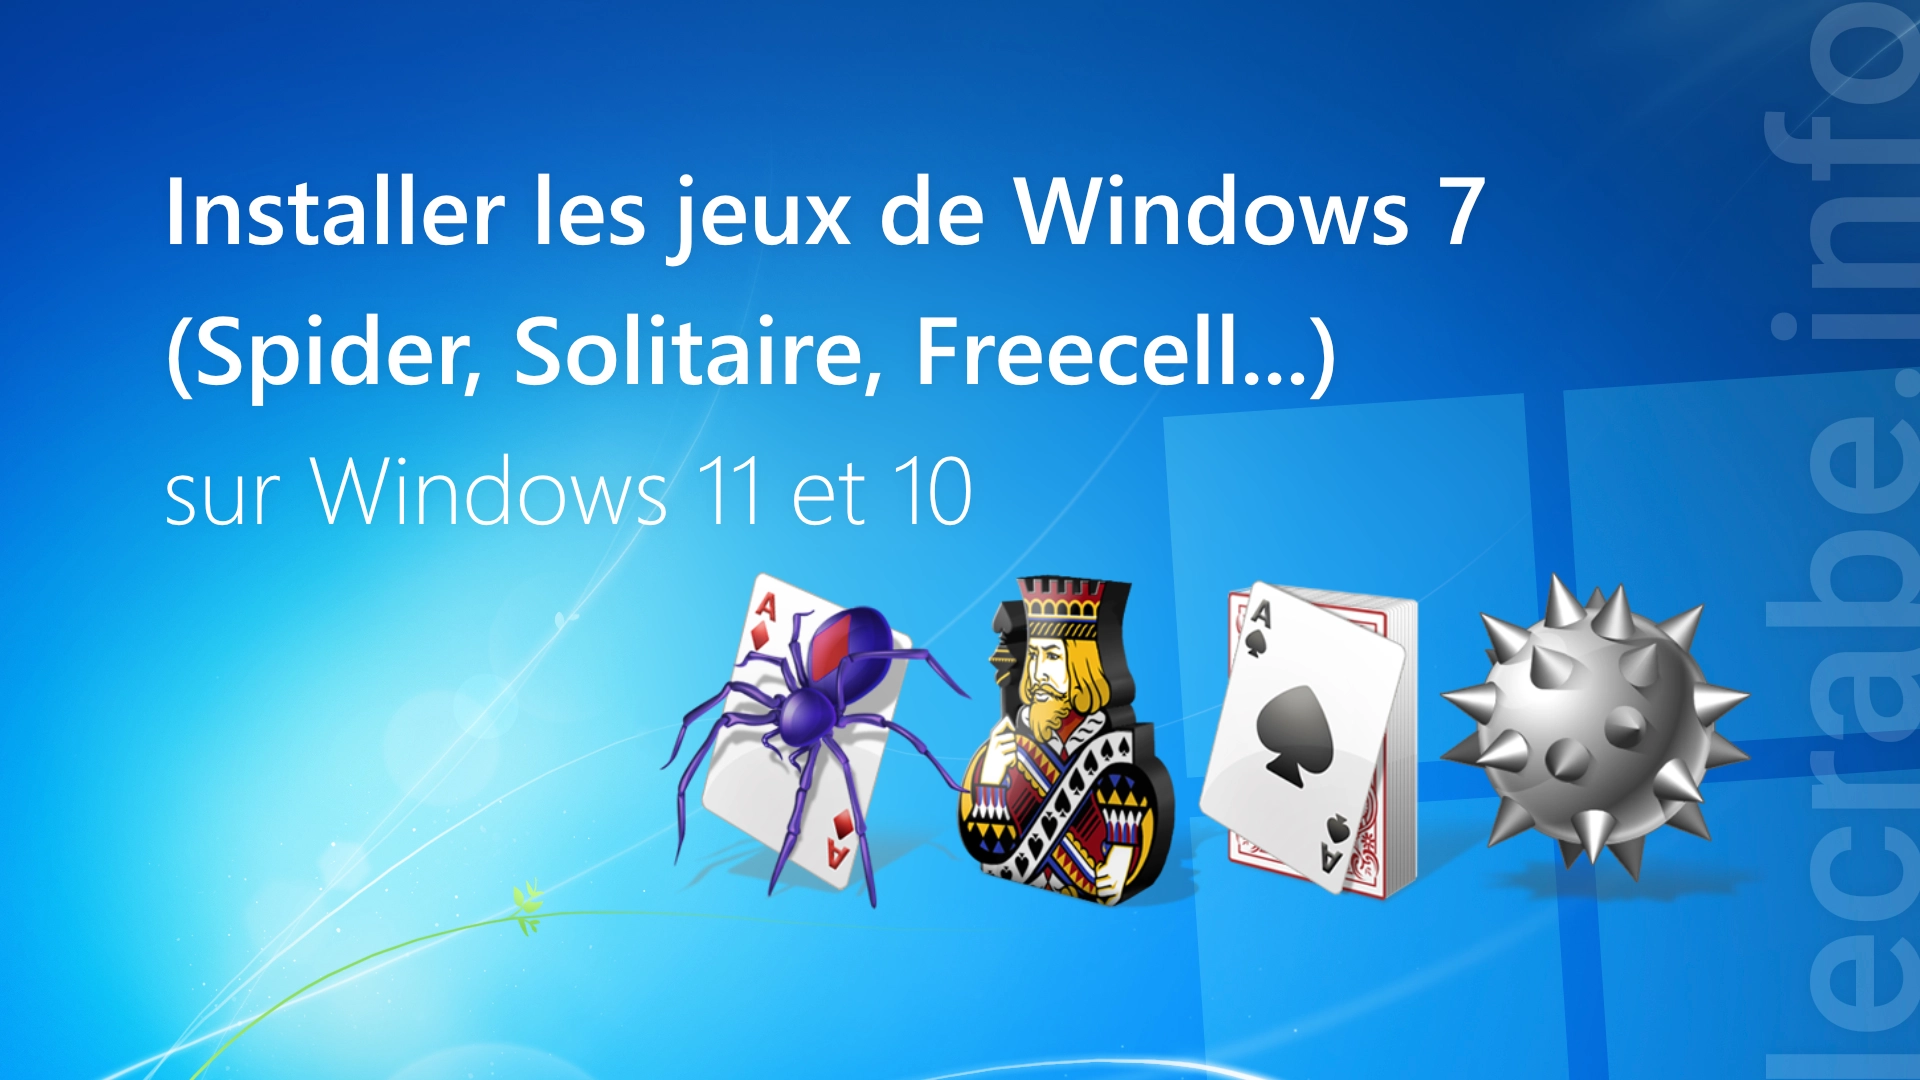 Installer Spider, Solitaire, FreeCell de Windows 7 sur Windows 10 et 11